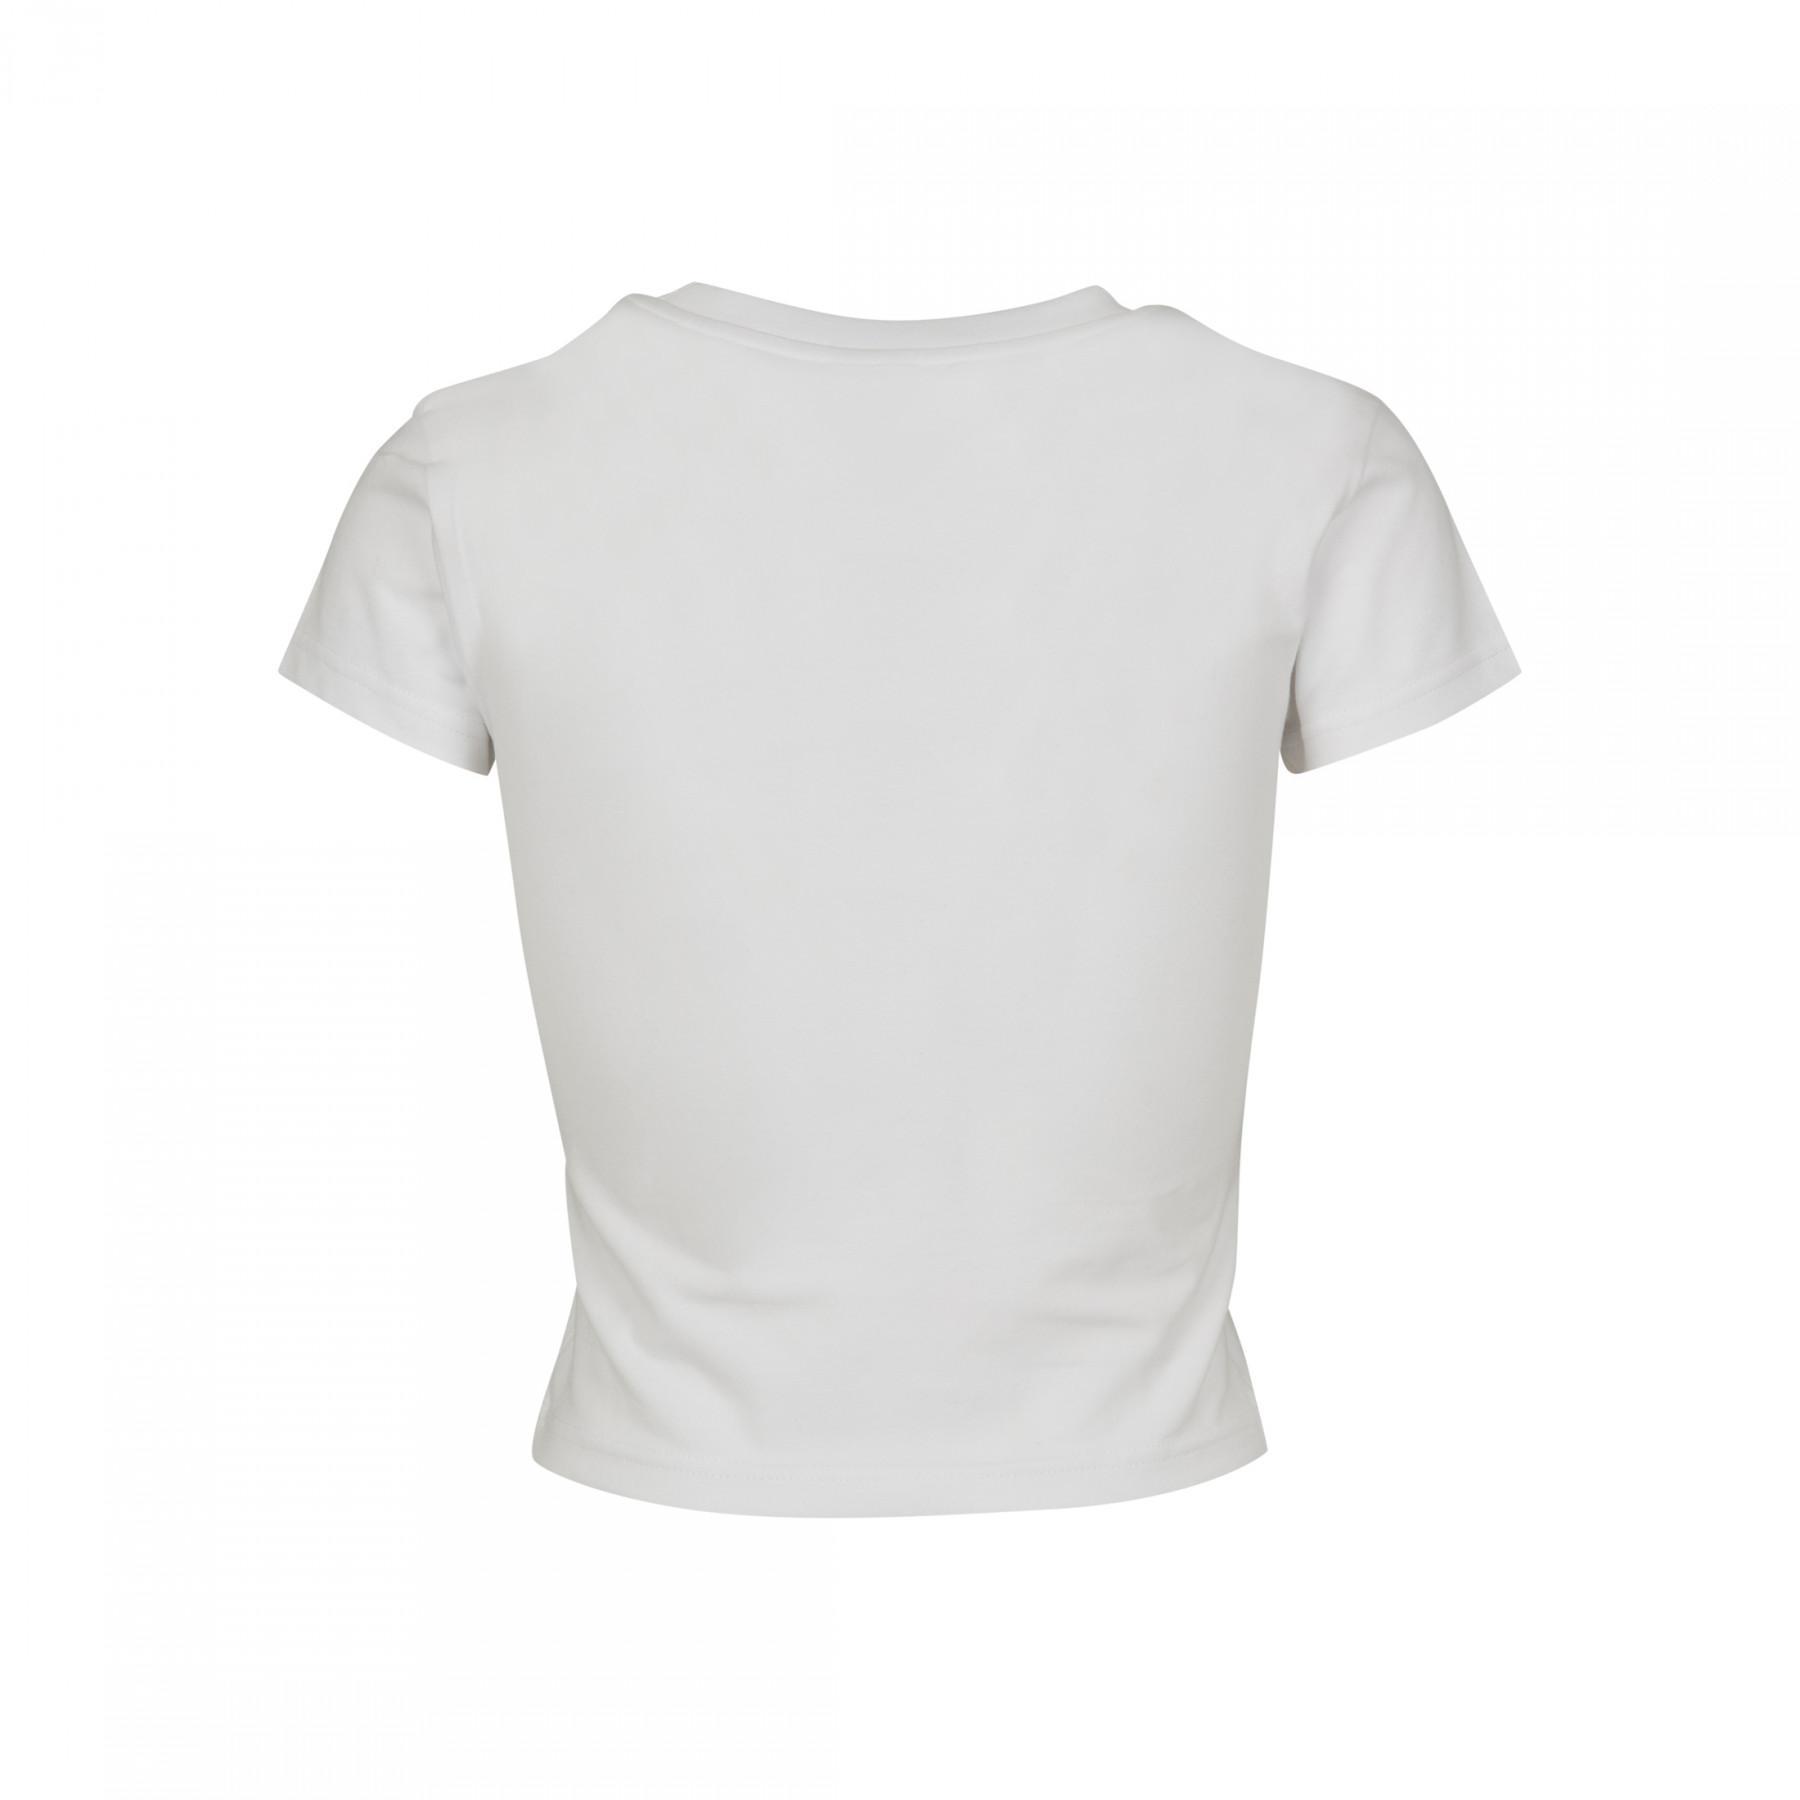 T-shirt femme Urban Classic stretch